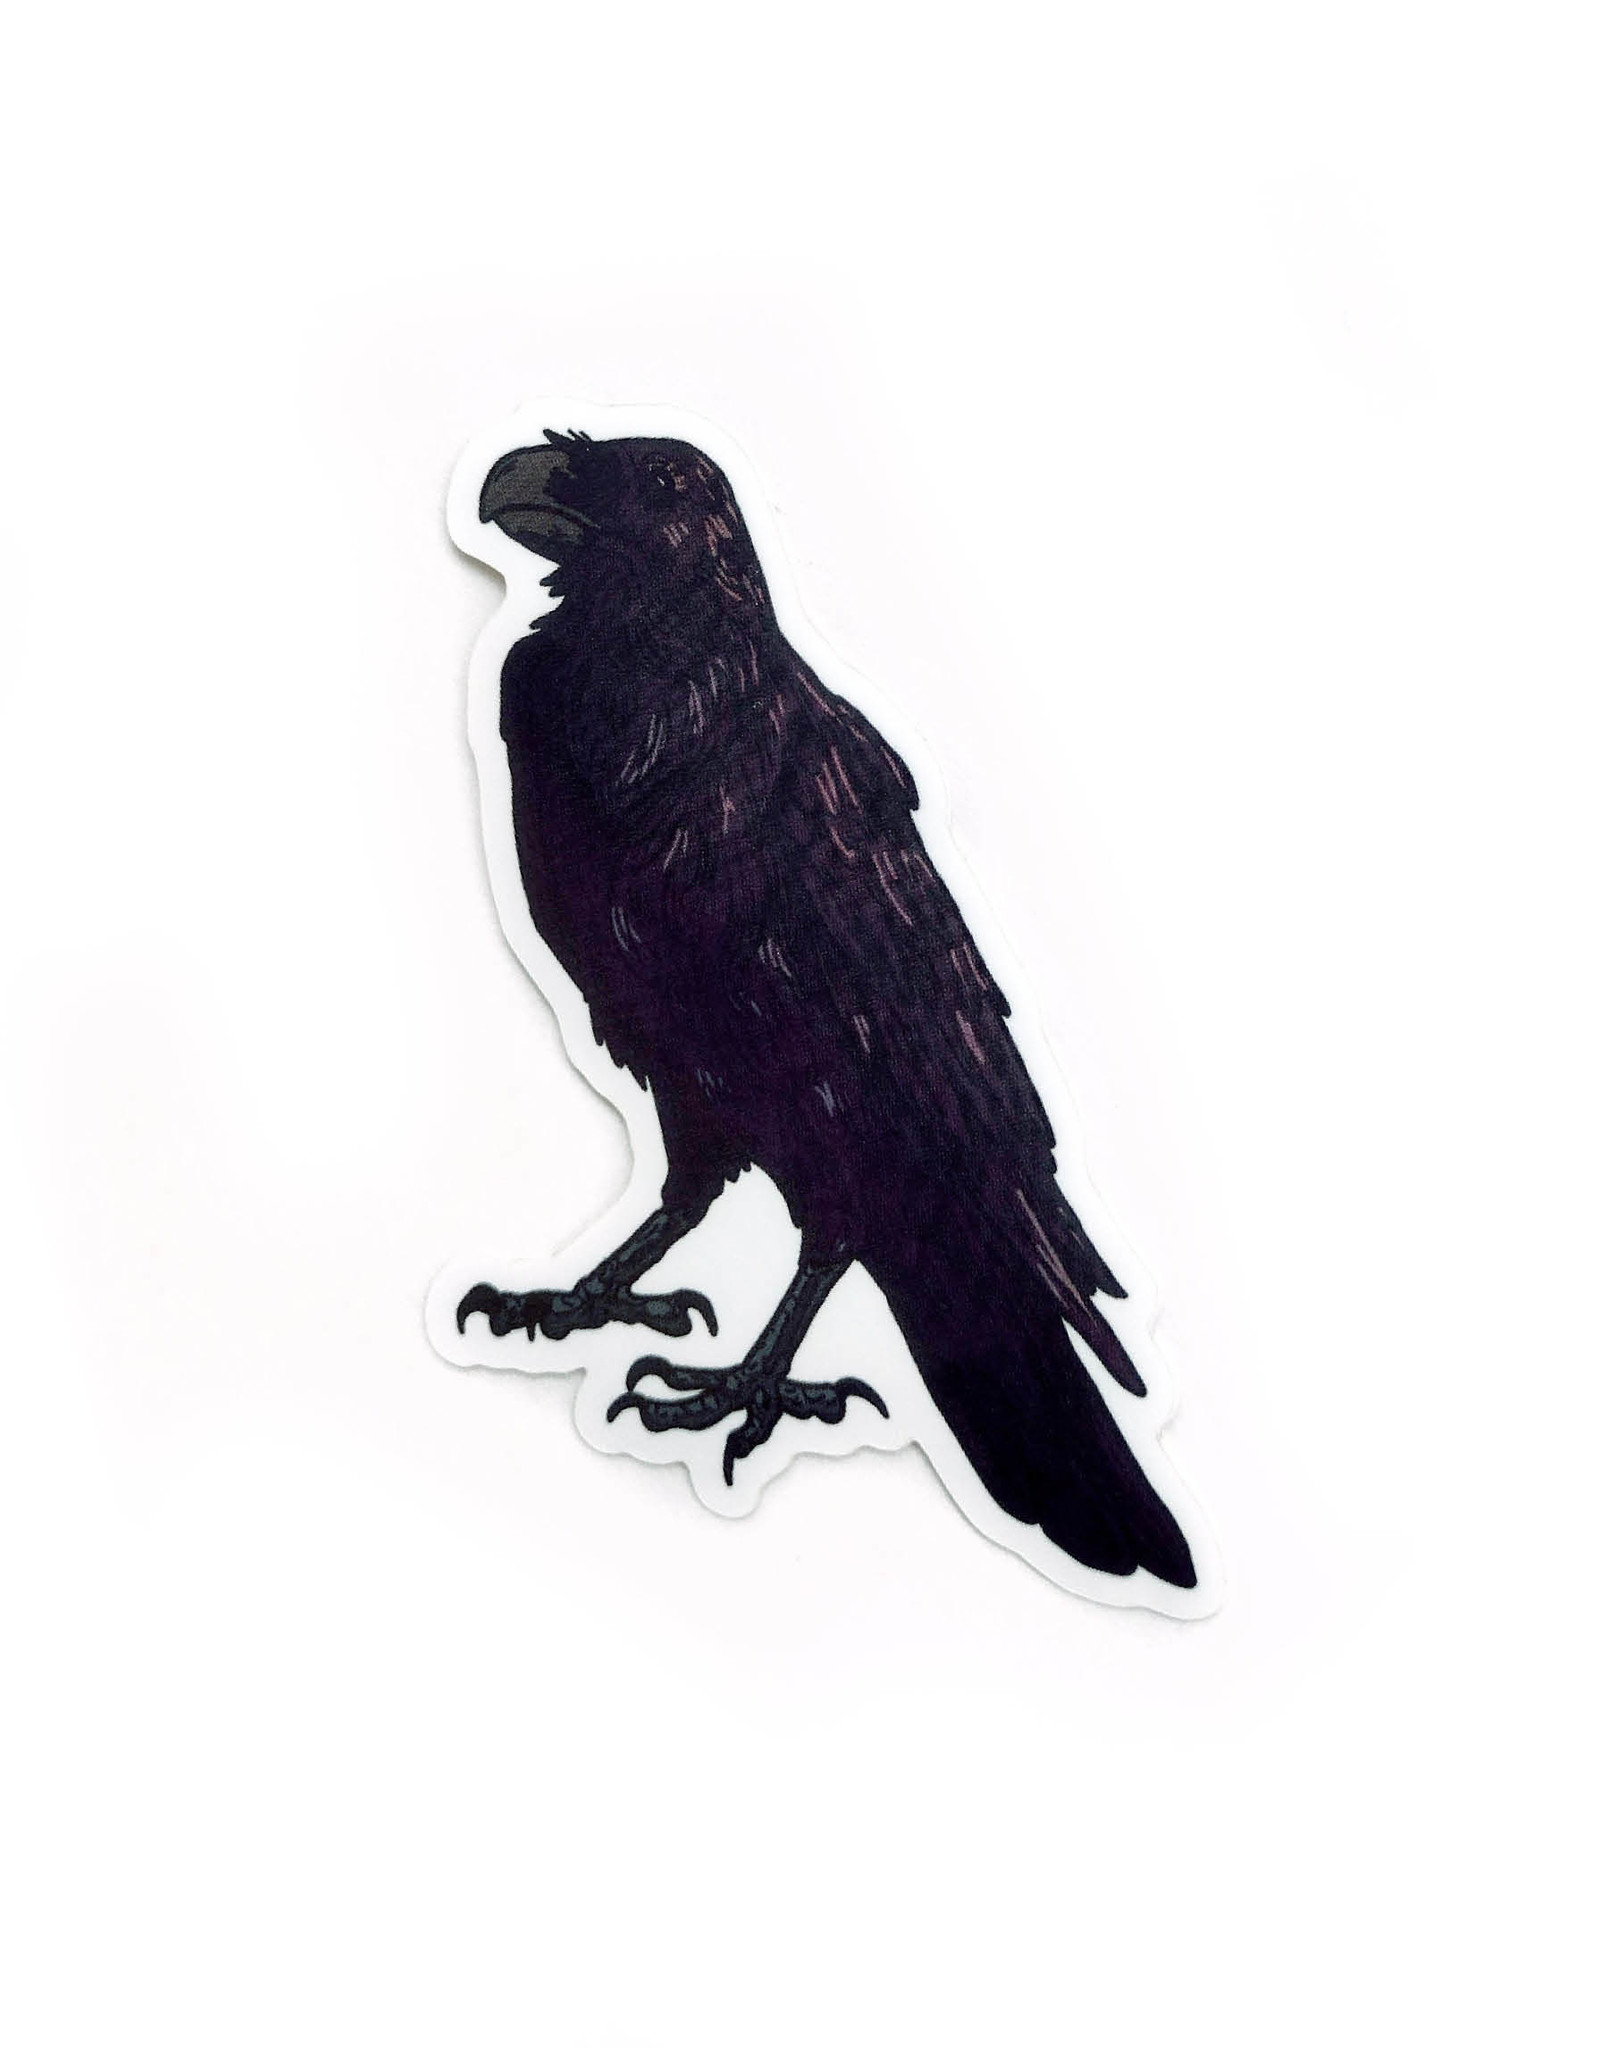 American Crow Vinyl Sticker by Corvidsol